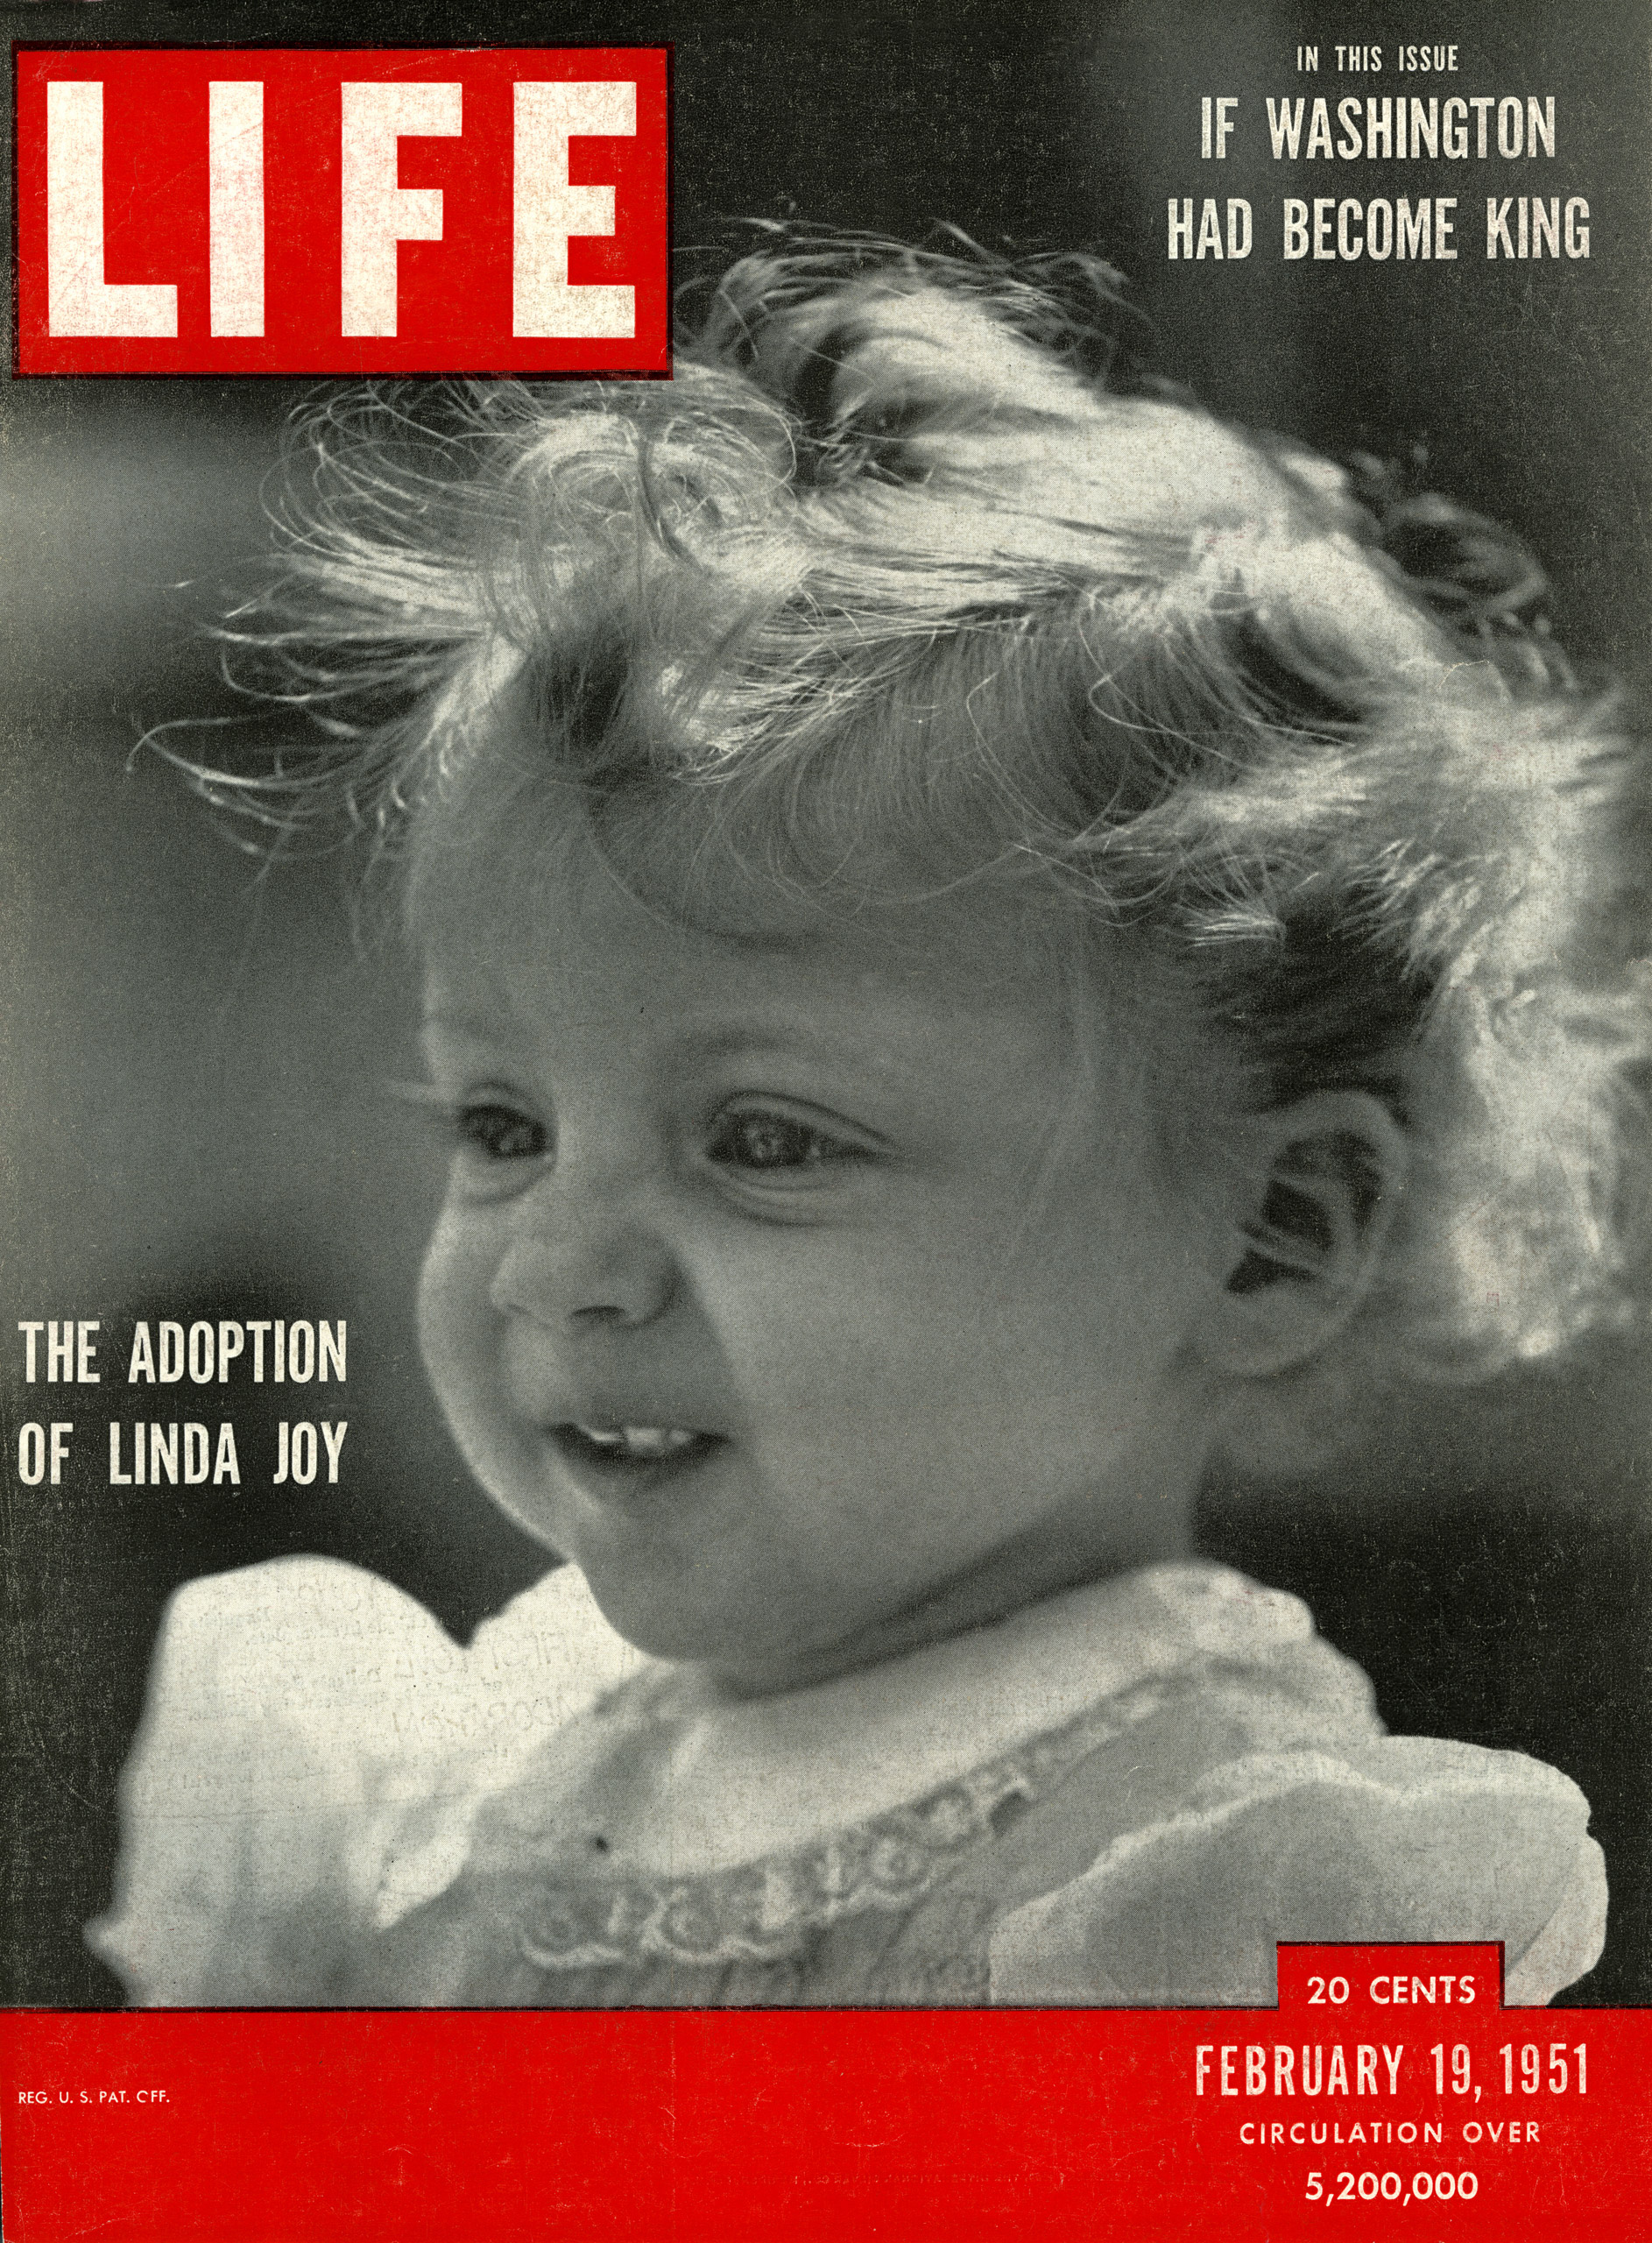 February 19, 1951 cover of LIFE magazine.